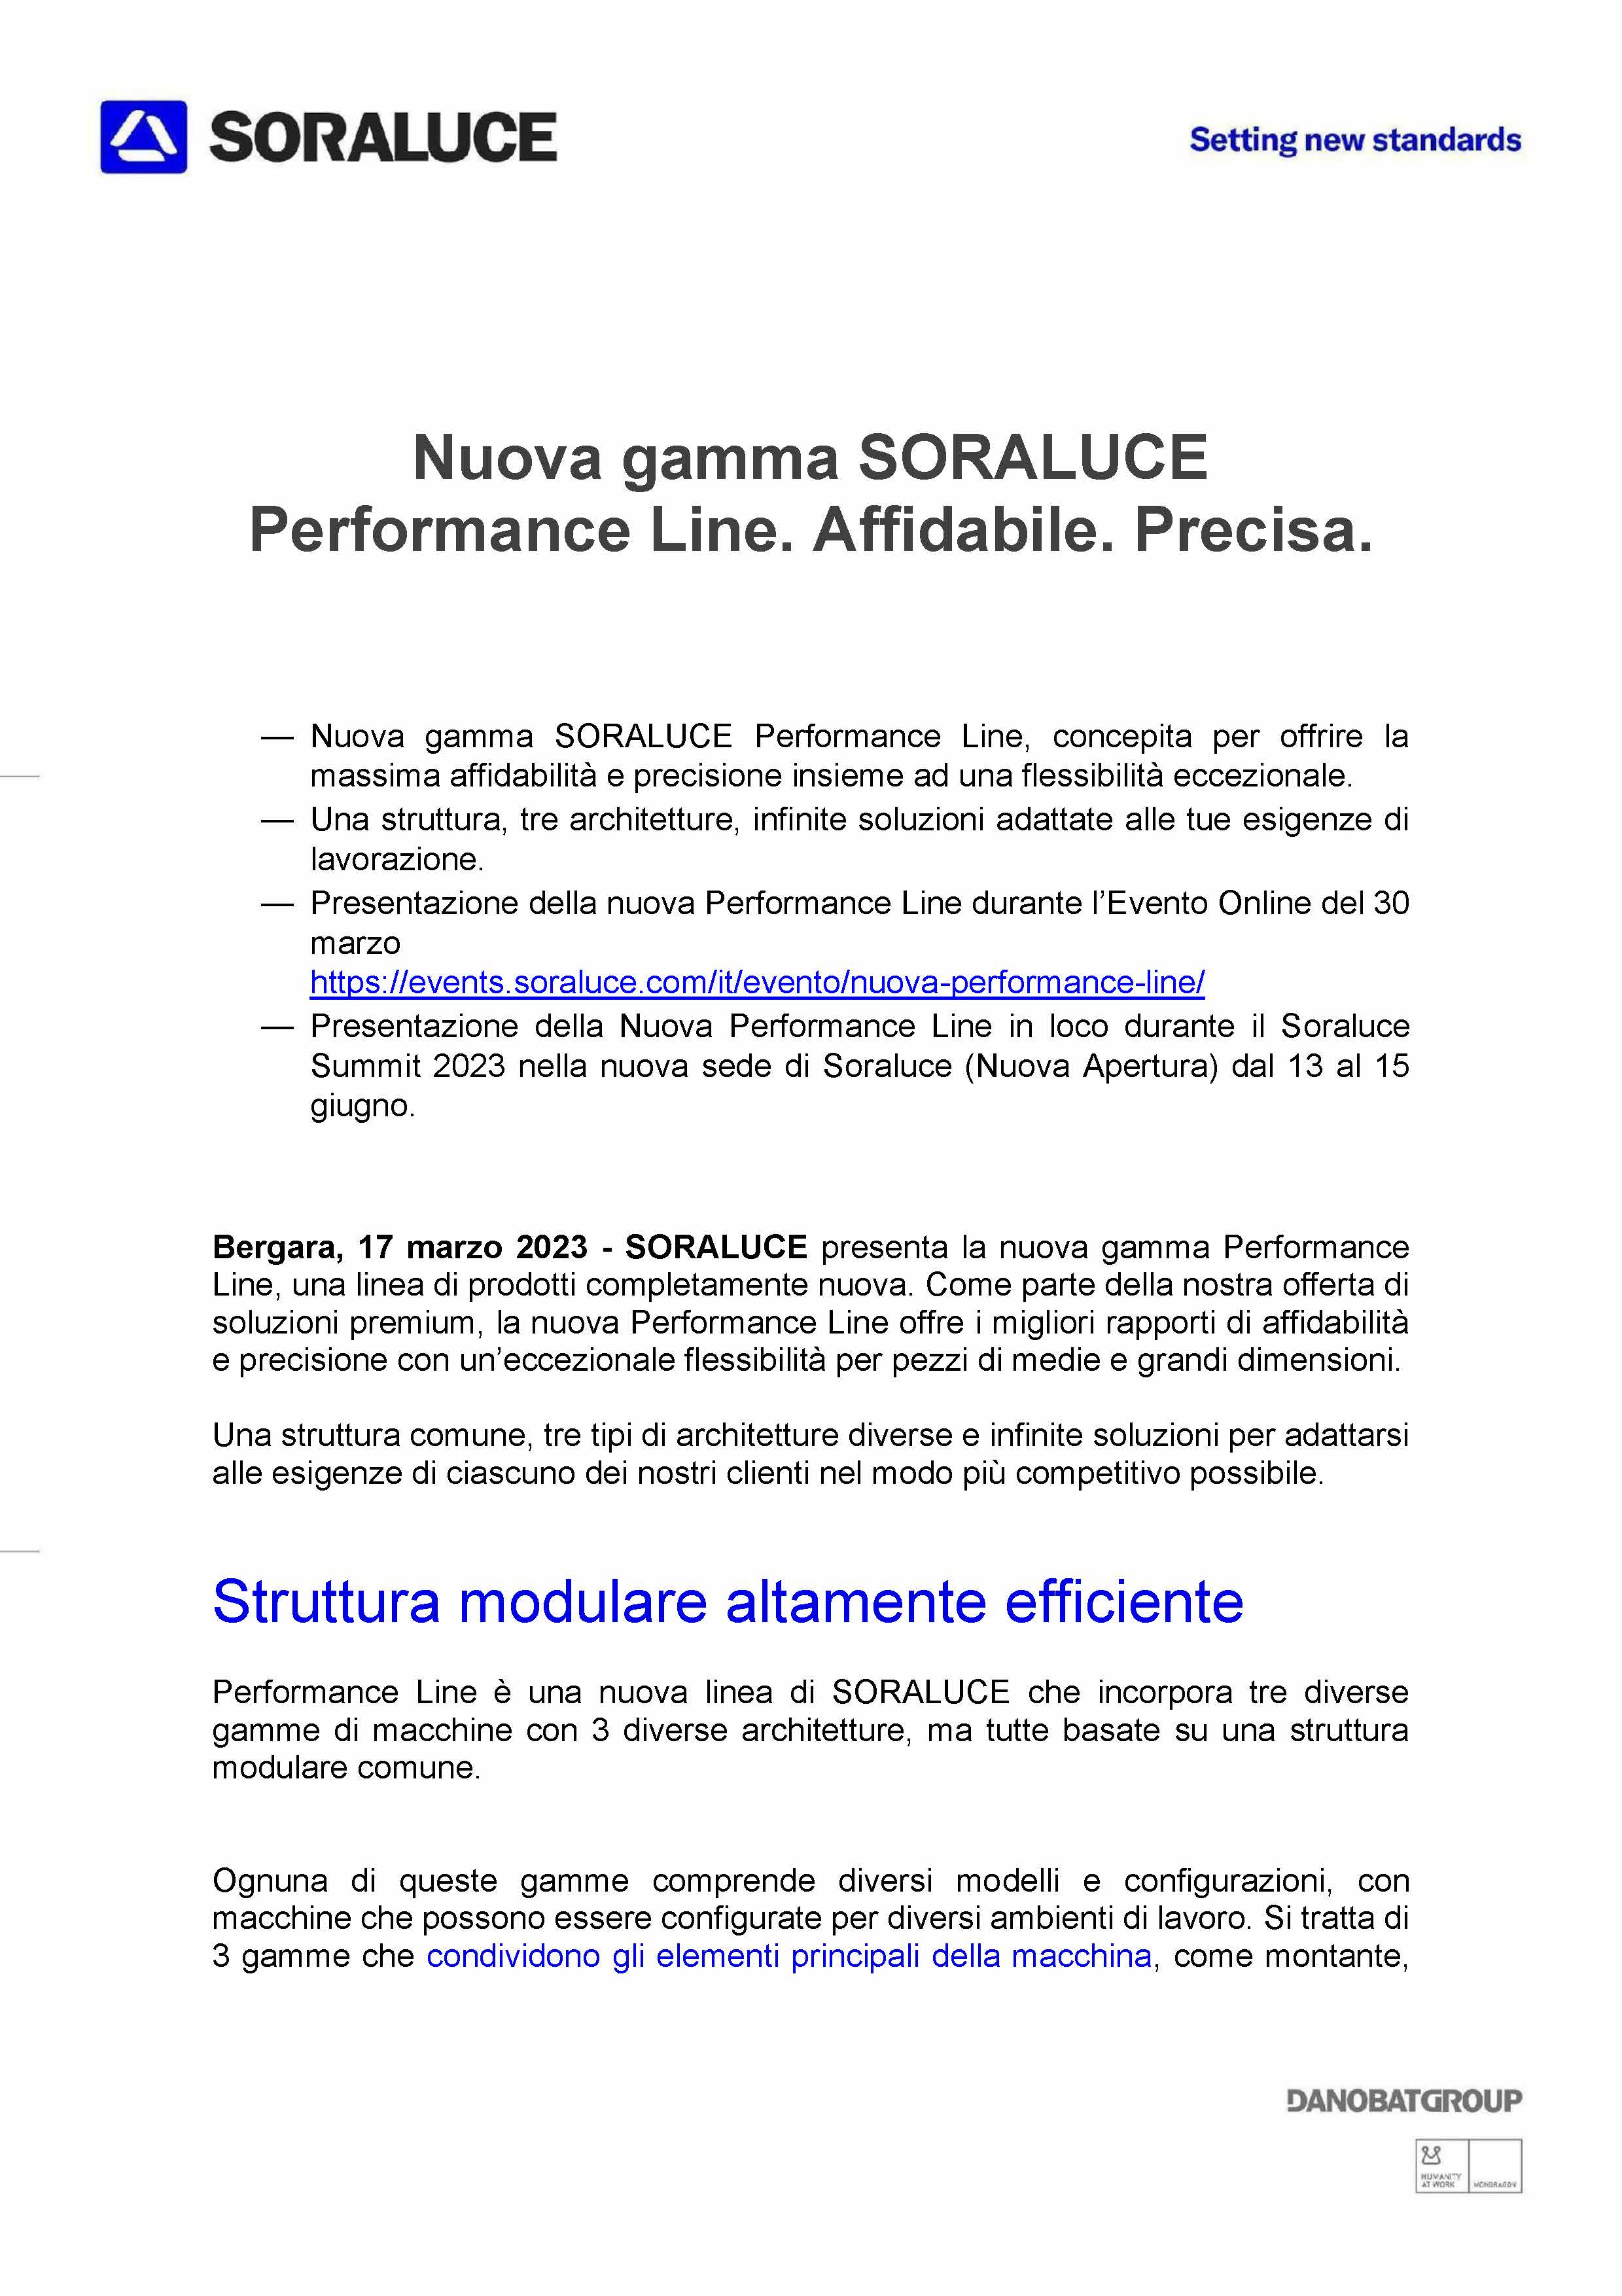 SORALUCE NUOVA PERFORMANCE LINE COMUNICATO STAMPA (ITALIANO)